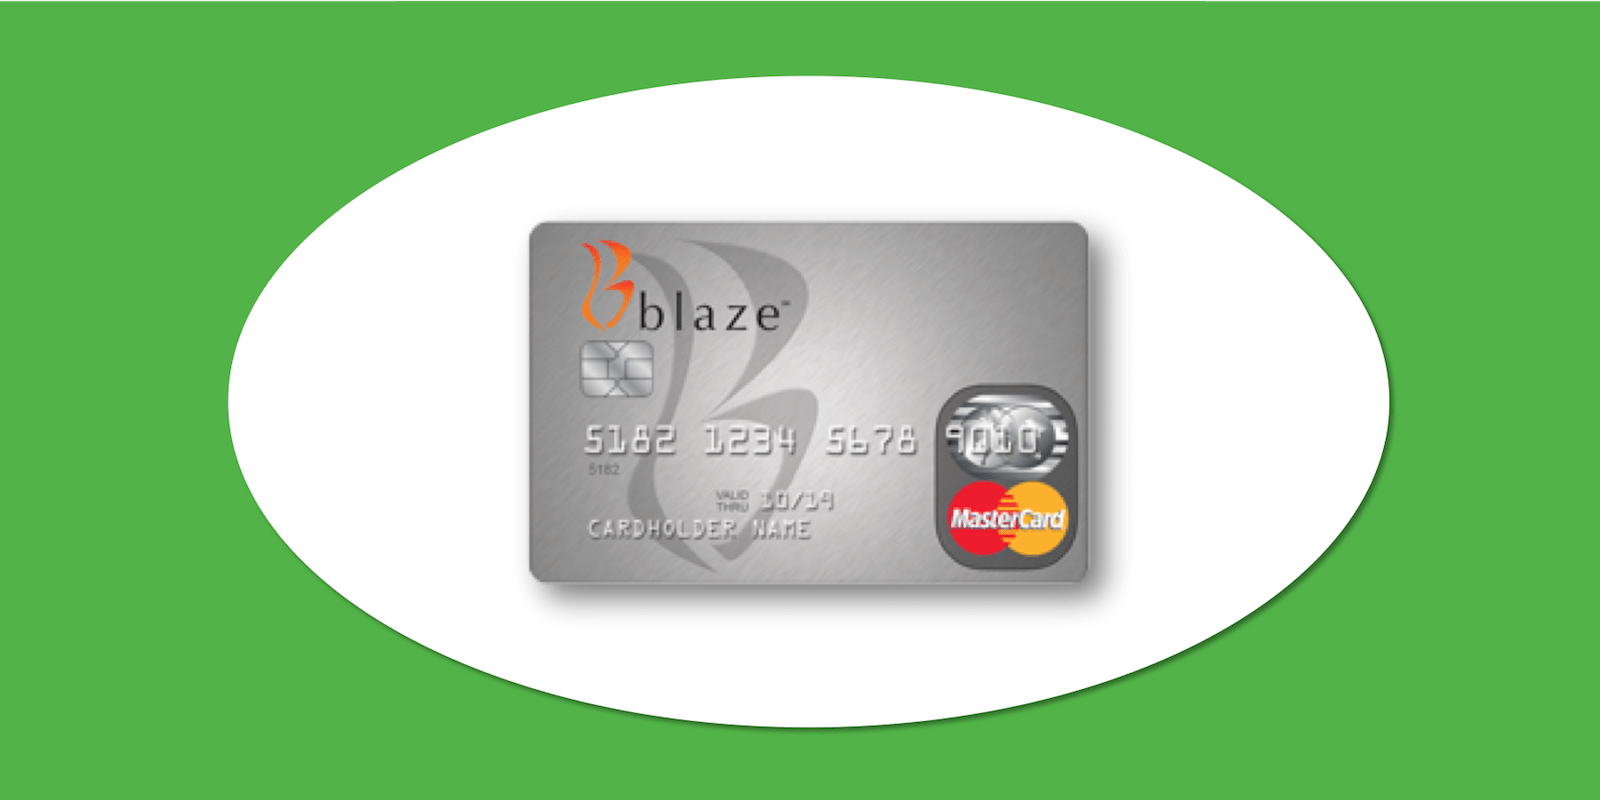 Blaze Credit Card Login, Registration, Activation, & Bill Payment Process